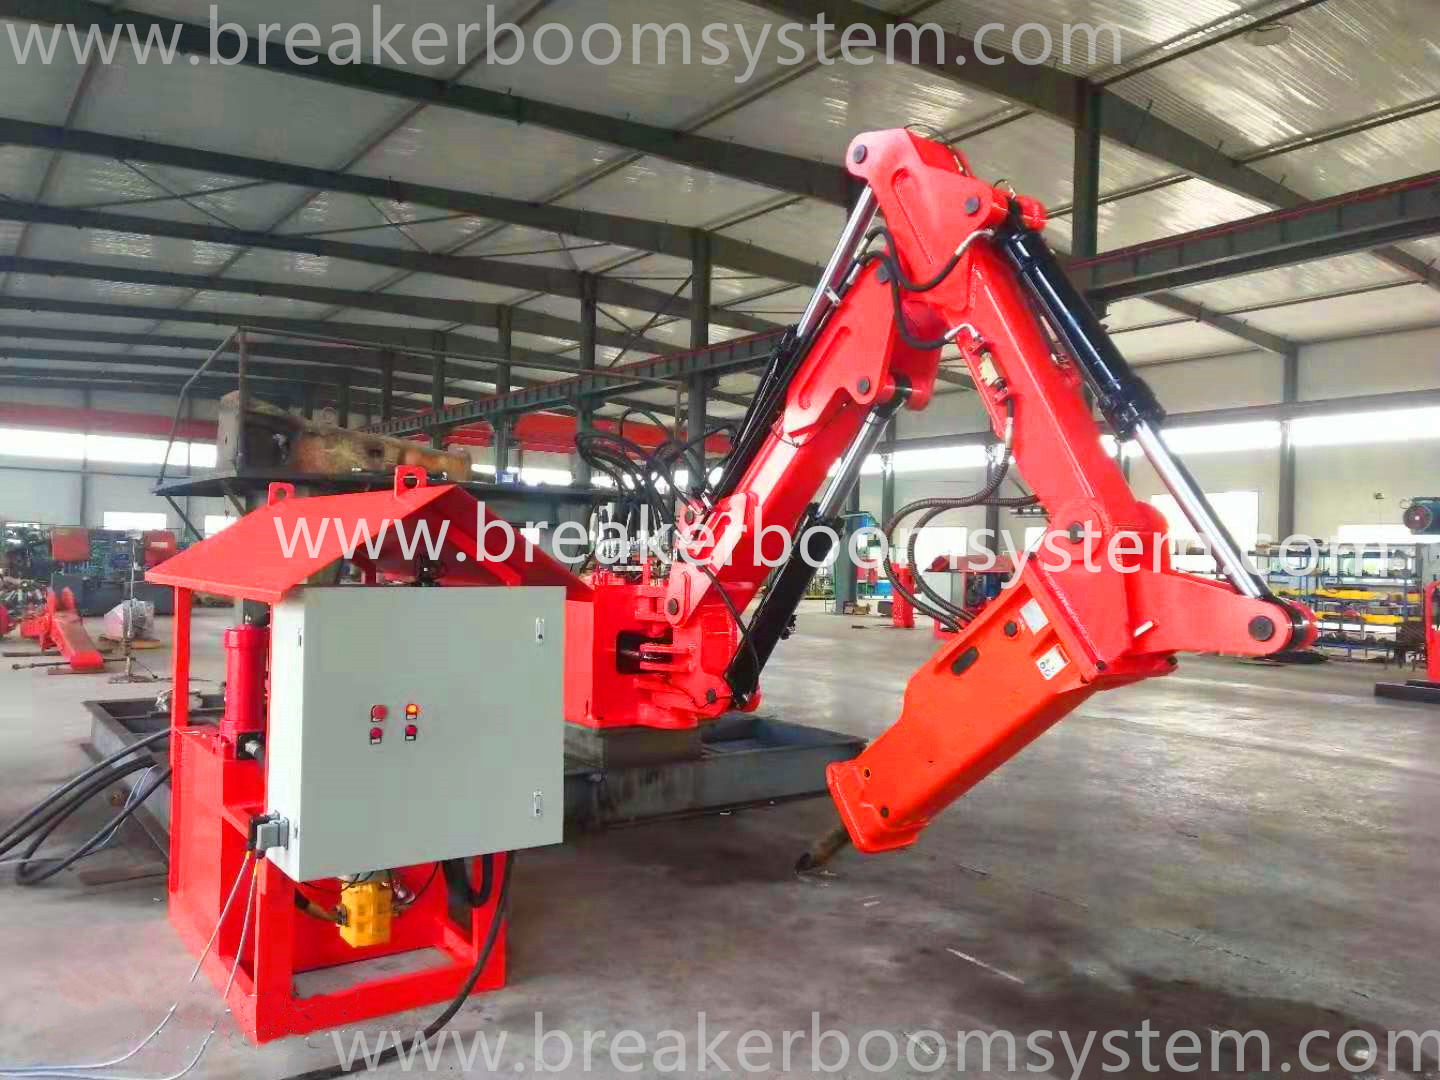 stationary breaker booms system